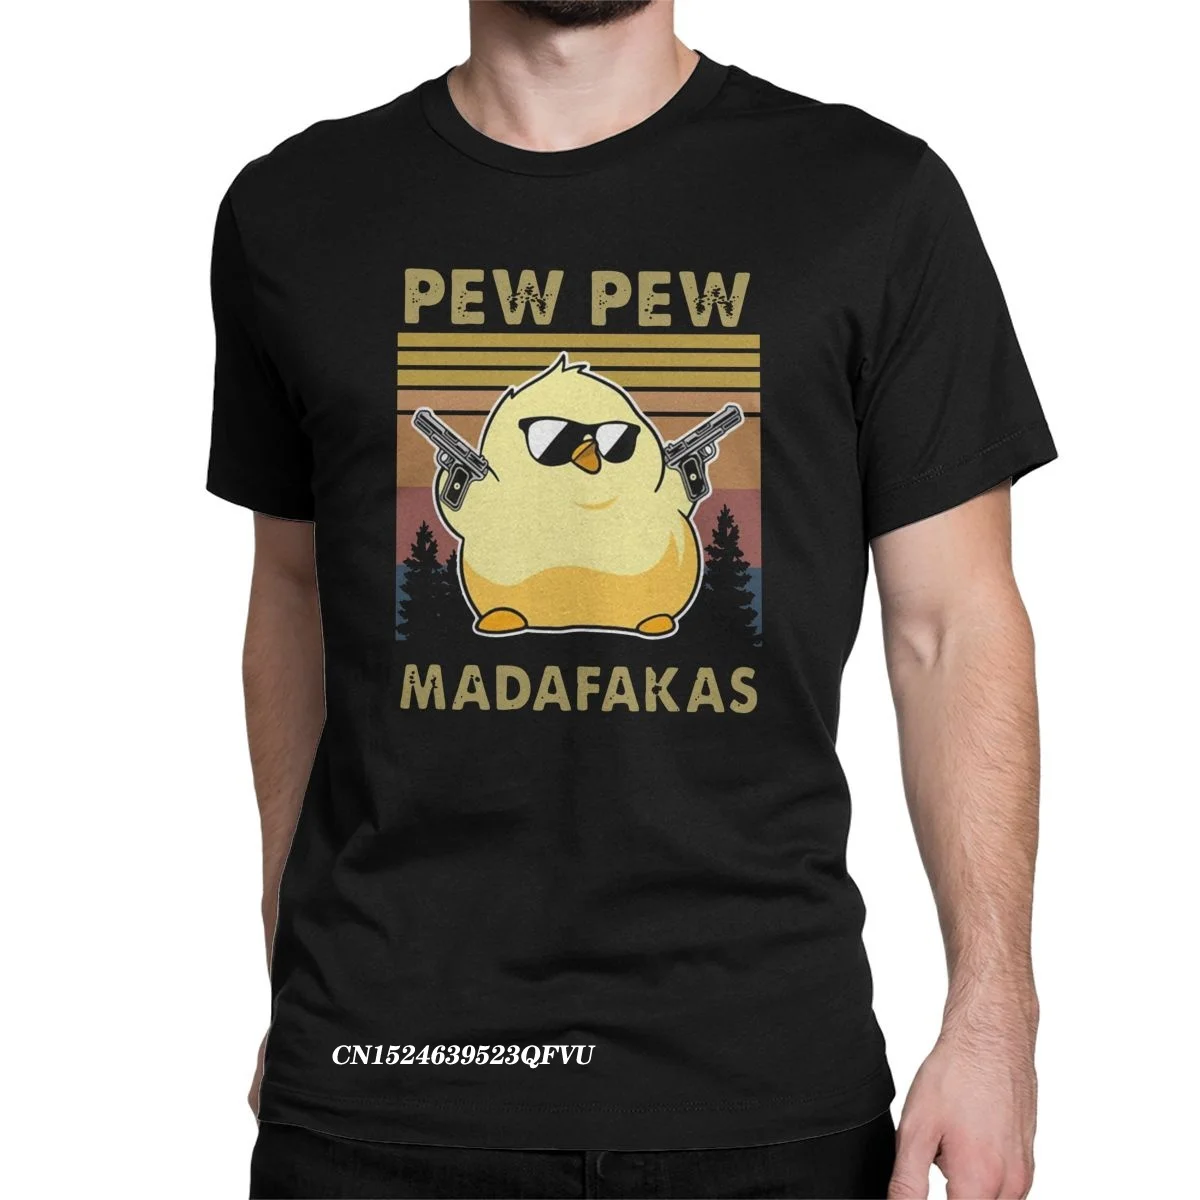 Pew Pew Madafakas Tops T Shirts Men Pure Cotton Funny Tee Shirt Manga Duck Meme Tee Shirt Harajuku Clothing Graphic Printed